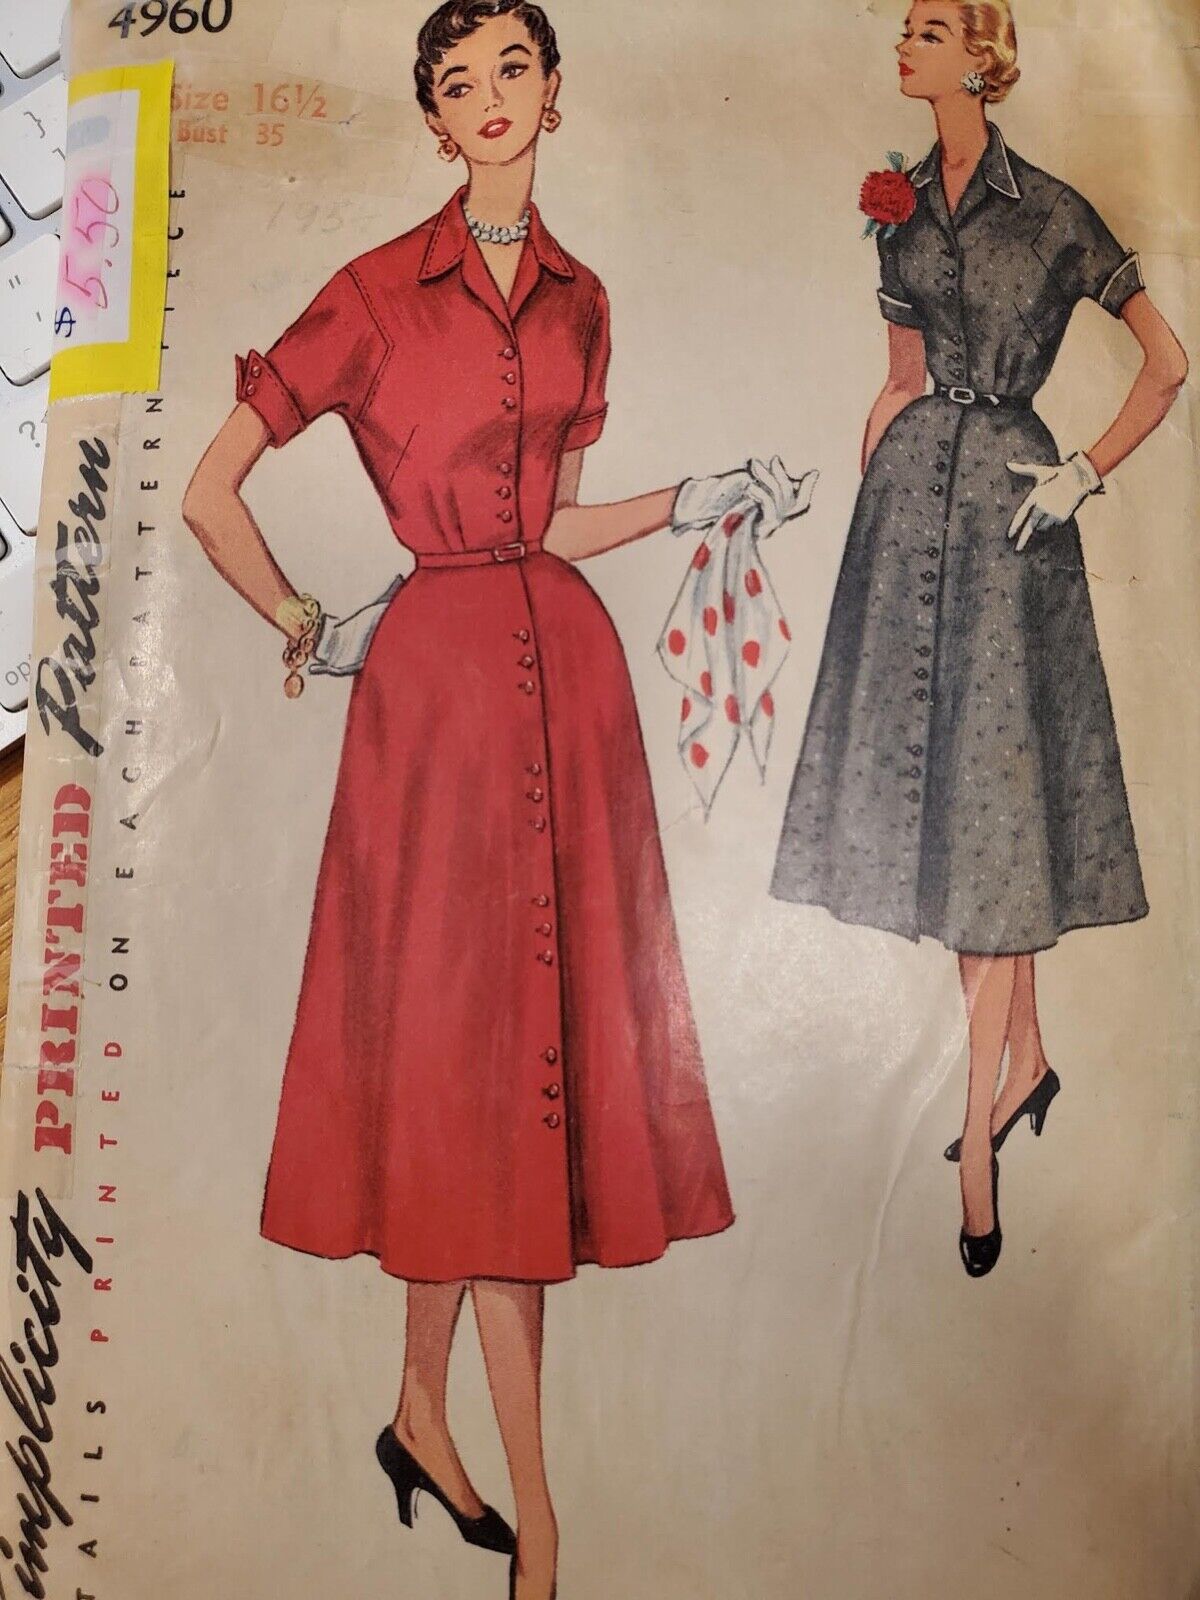 VINTAGE 1954 SIMPLICITY 4960 DRESS SEWING PATTERN SZ 16.5 BUST 35 (TODAYS SZ 10)